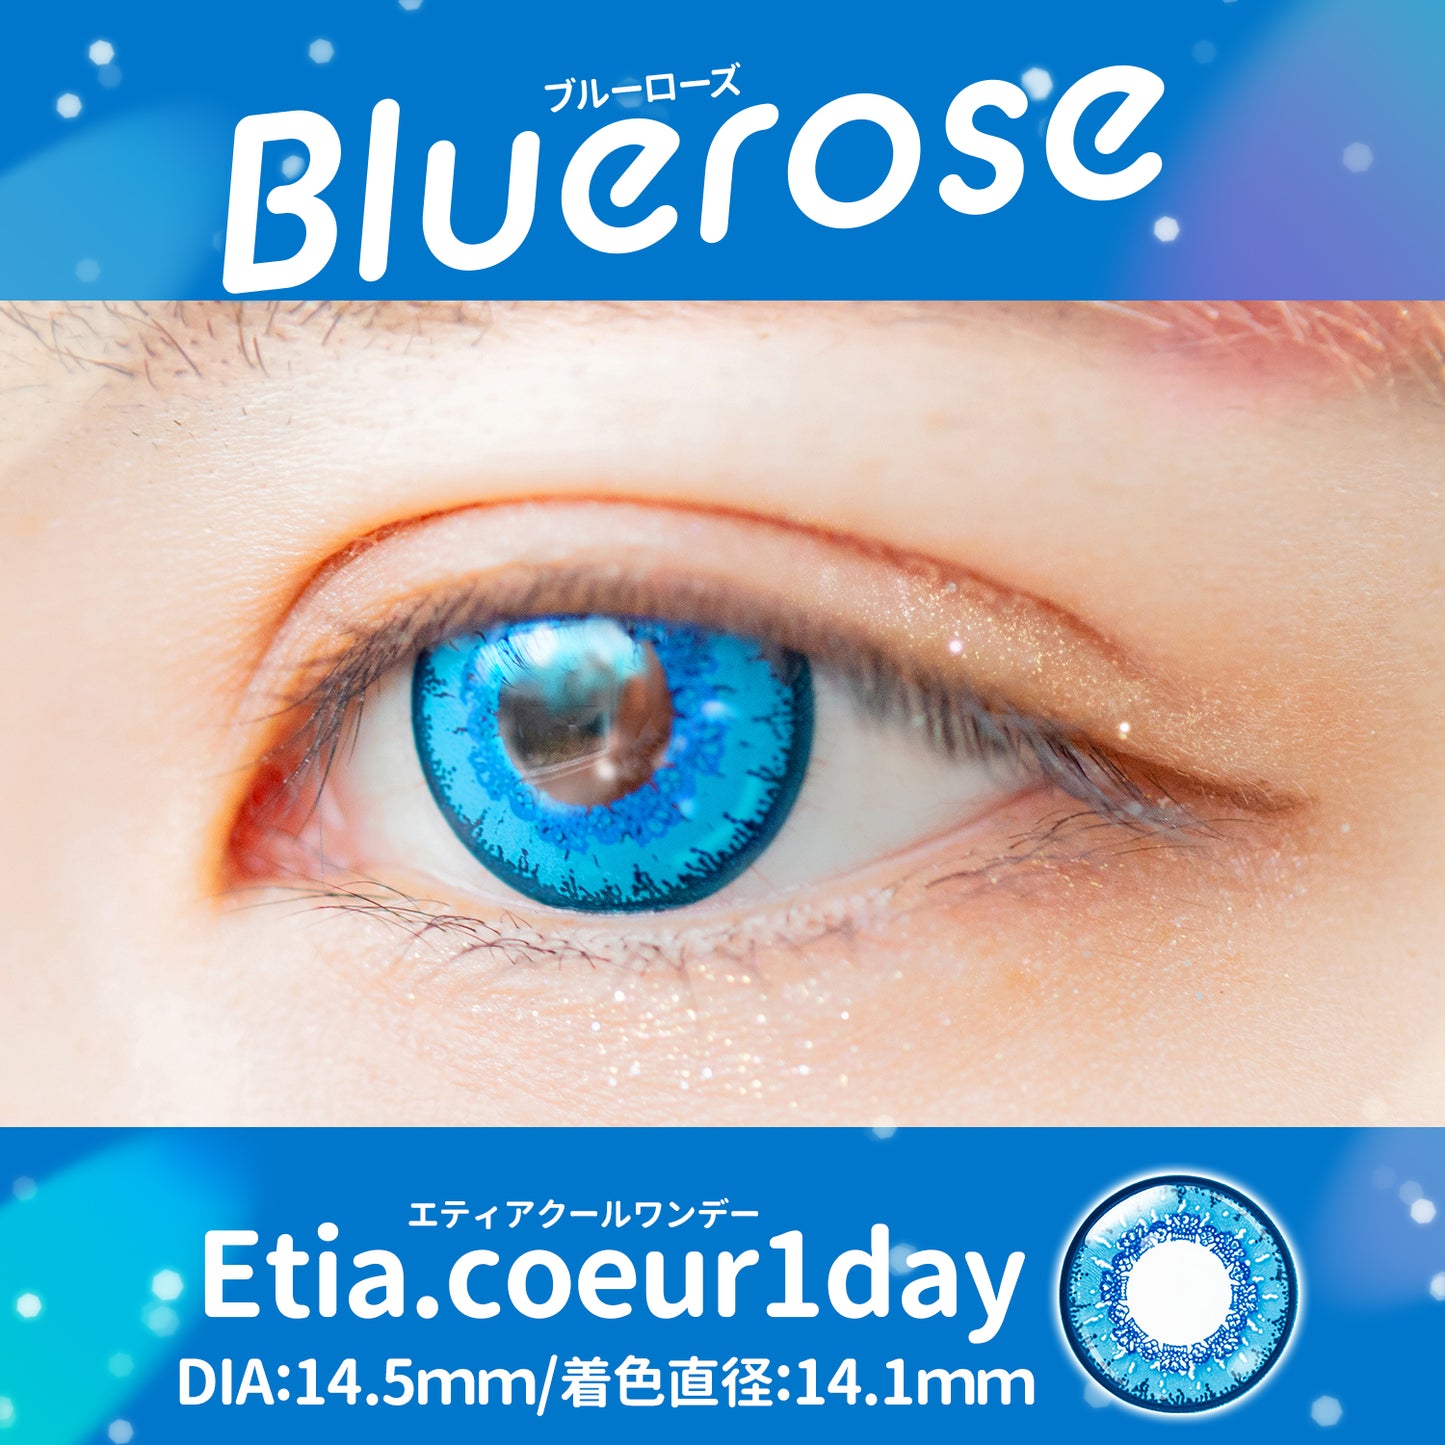 PUDDING Etia Coeur Blue Rose | 1 Day, 6 Pcs